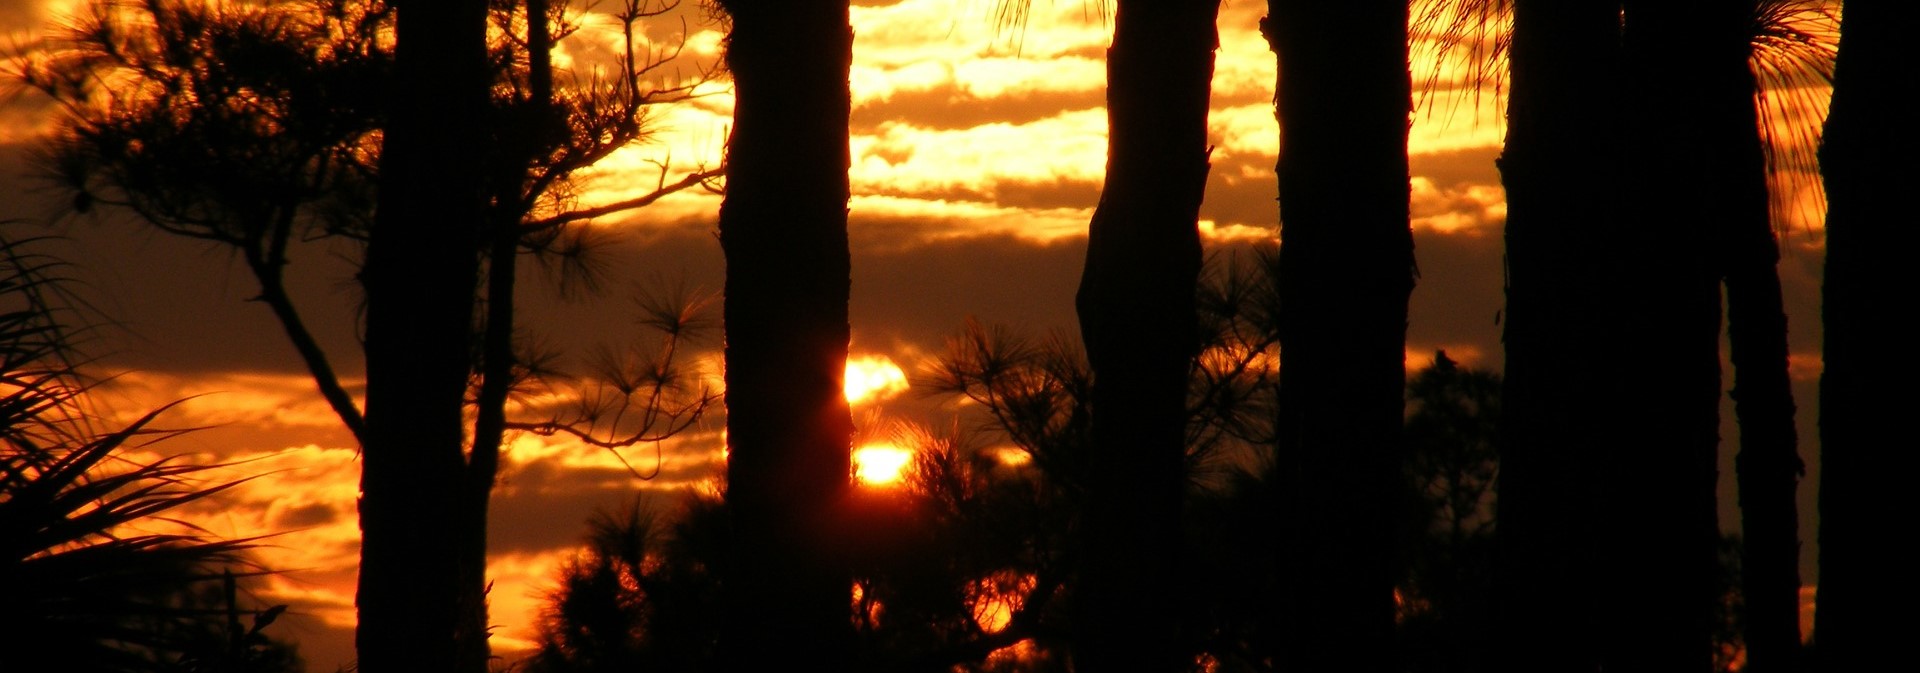 Sunset in Punta Gorda Florida - CarDonations4Cancer.org